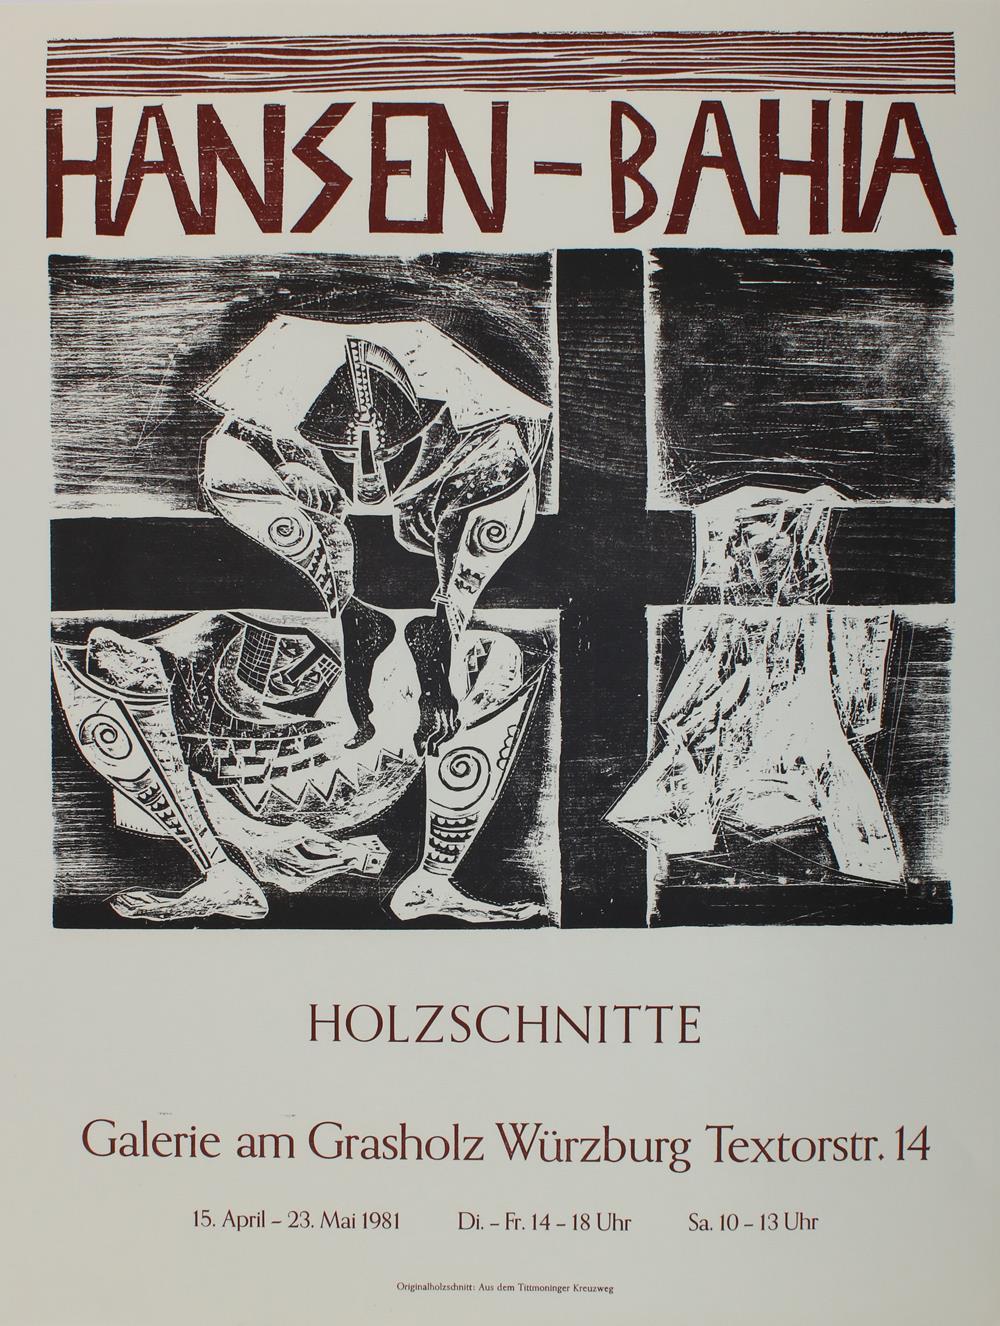 Hansen-Bahia, Karl-Heinz | Bild Nr.1